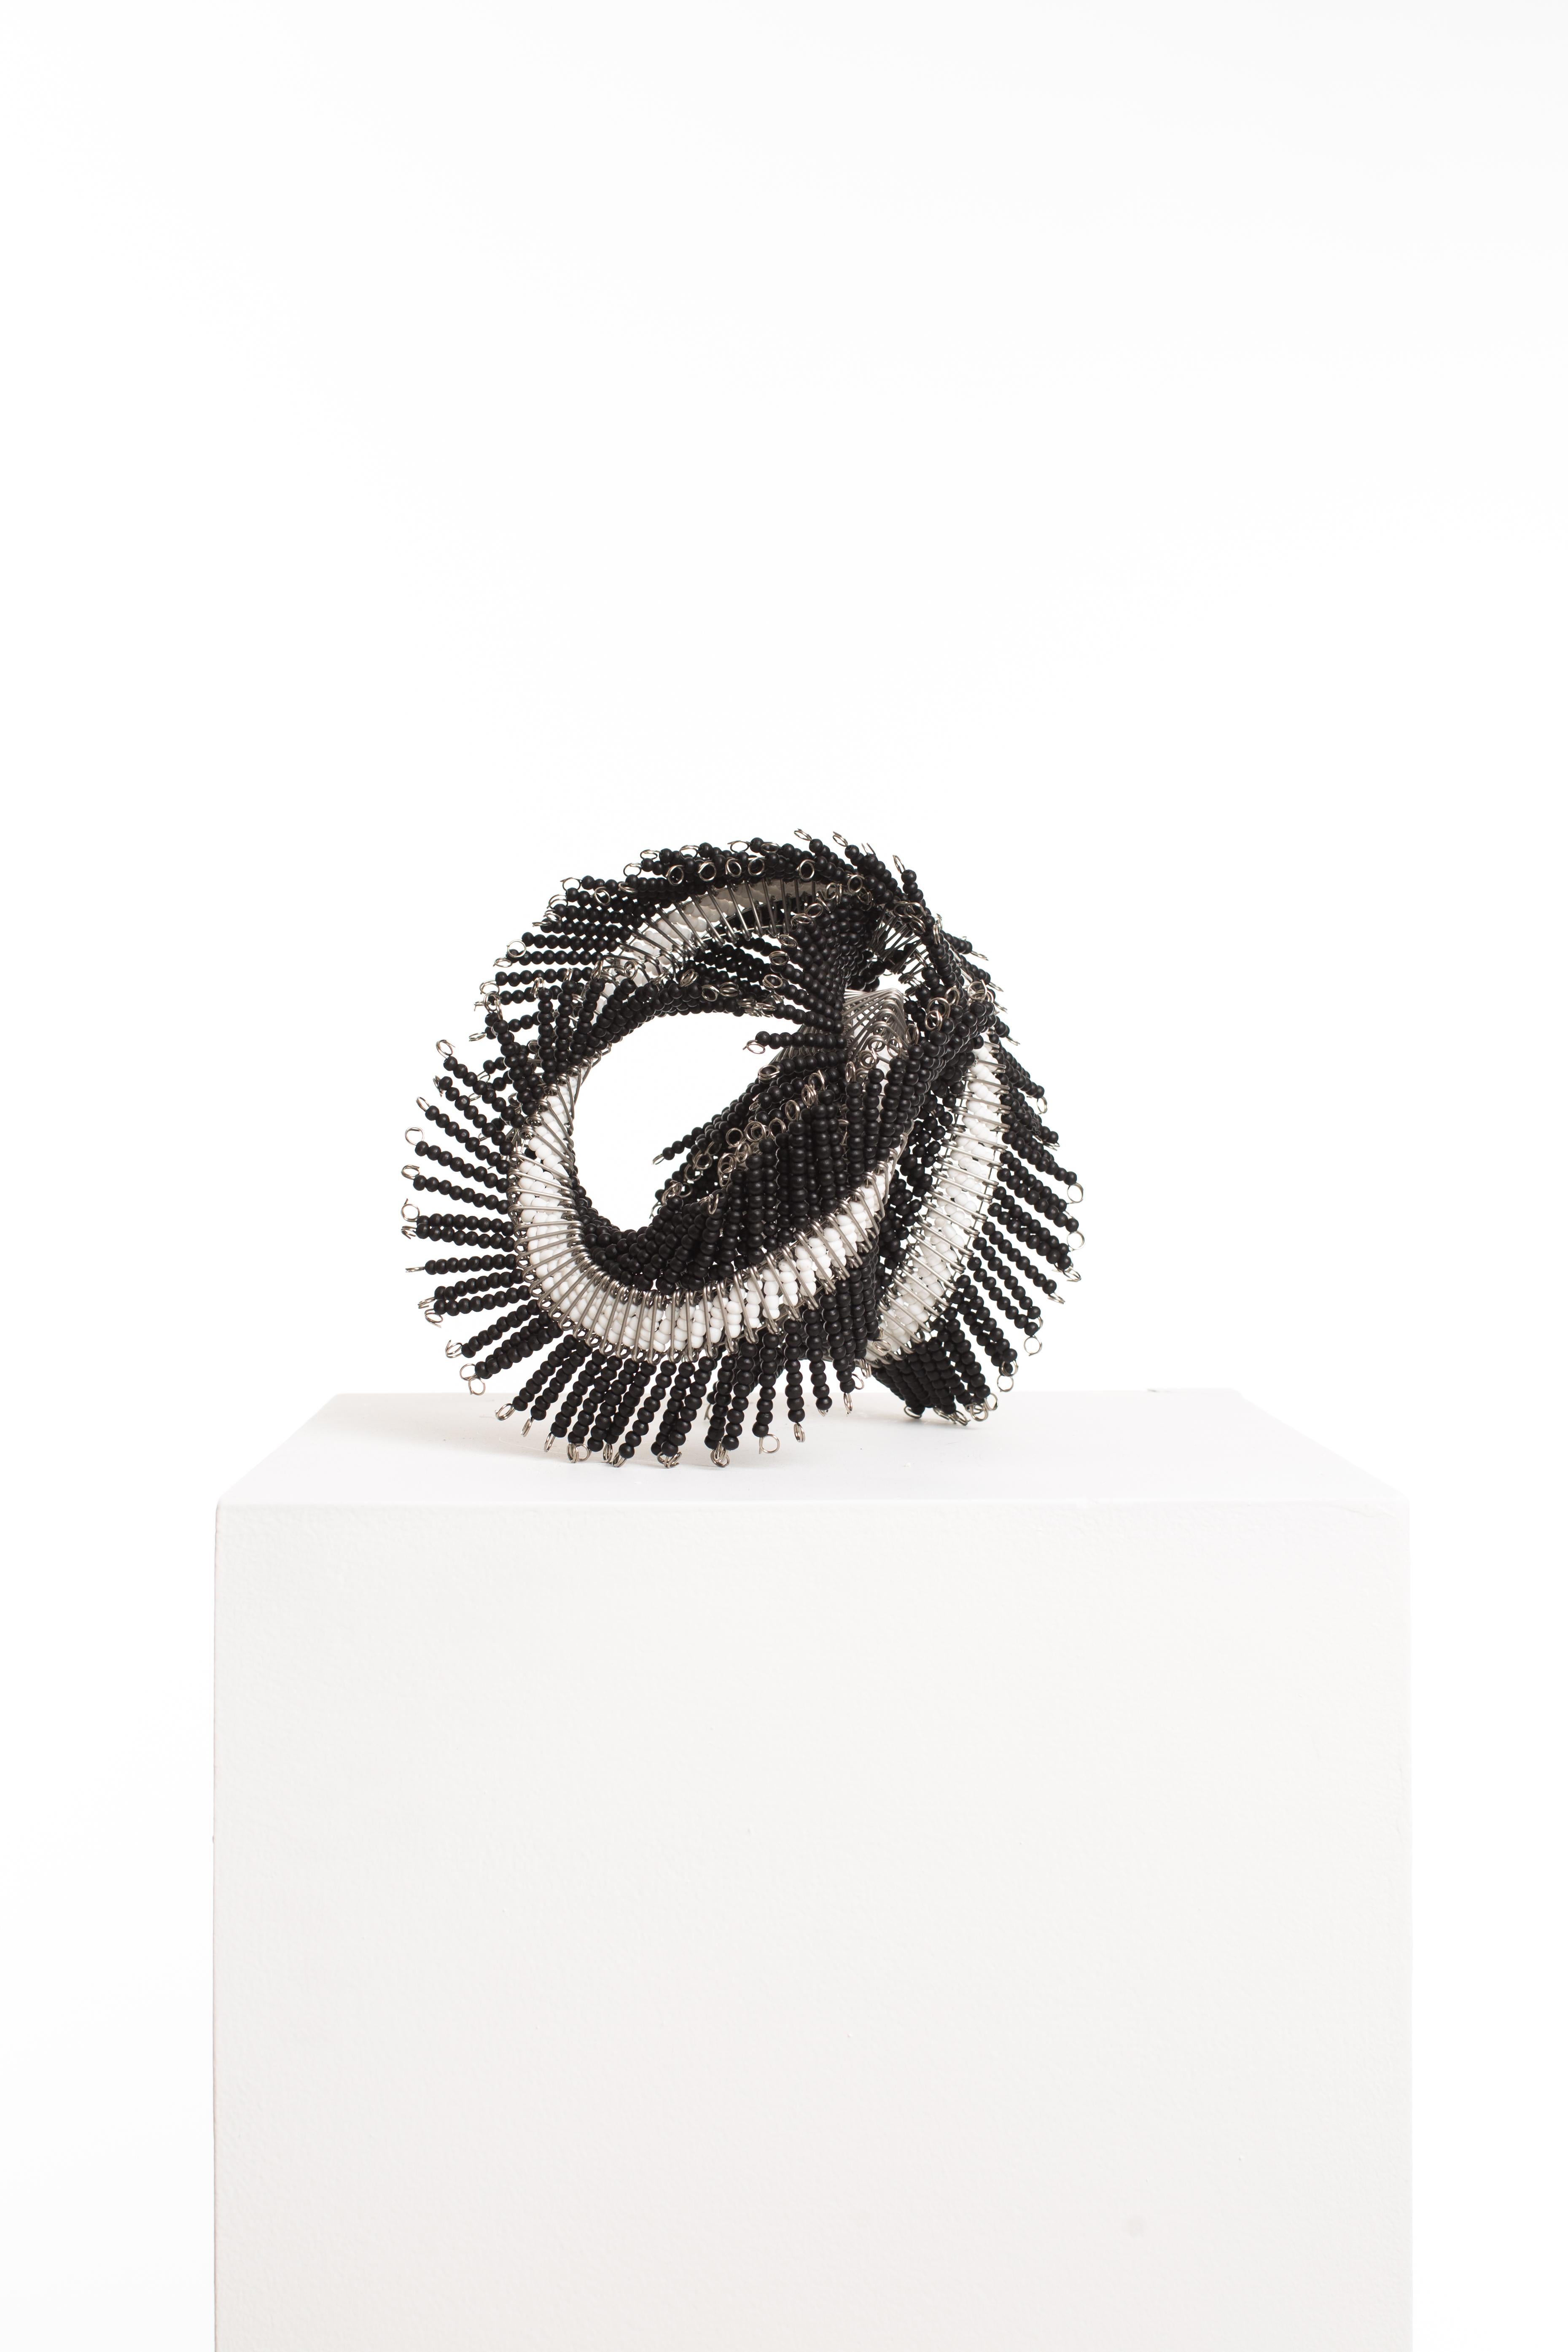 Driaan Claassen Abstract Sculpture - Black, White, Beaded, Steel, Pattern, Abstract, Contemporary, Modern, Art